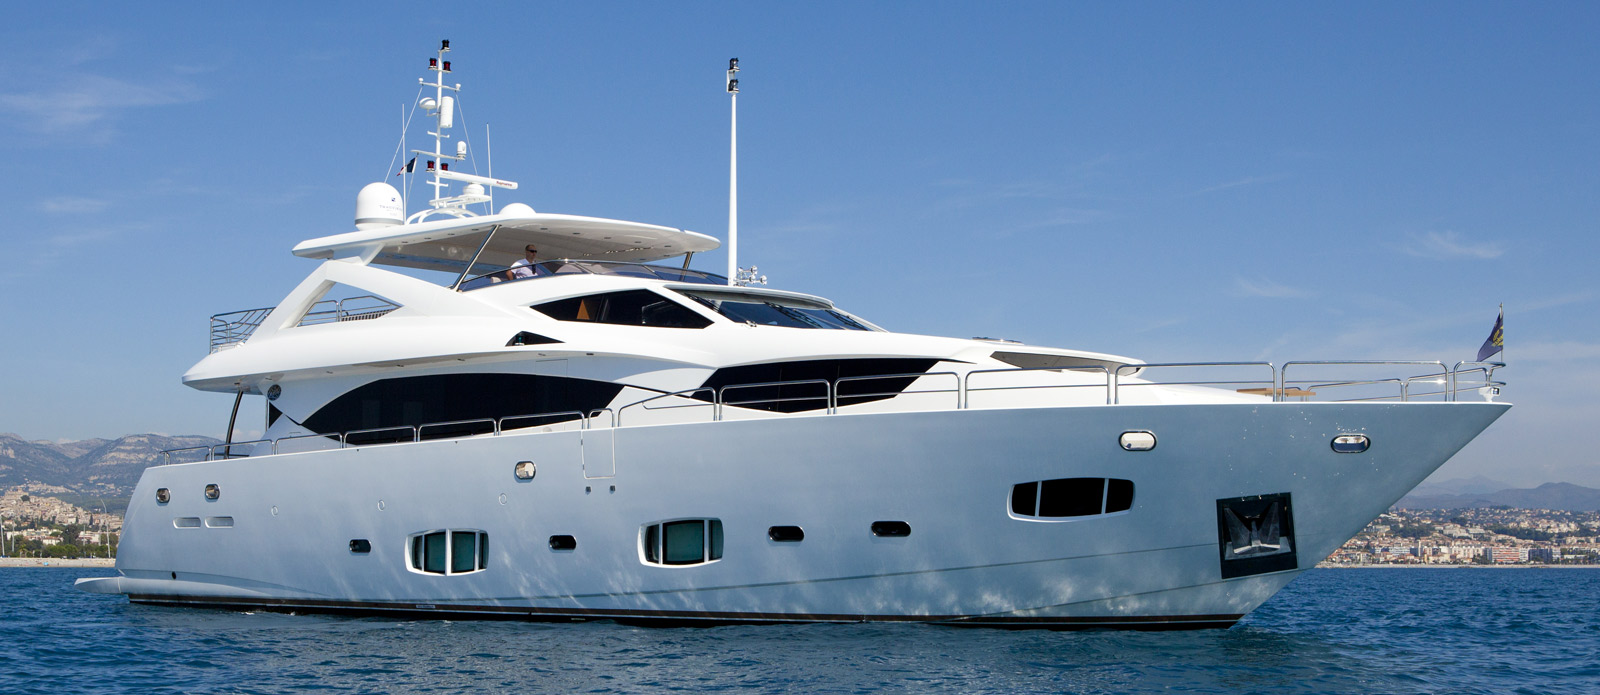 yacht 30 metri costo